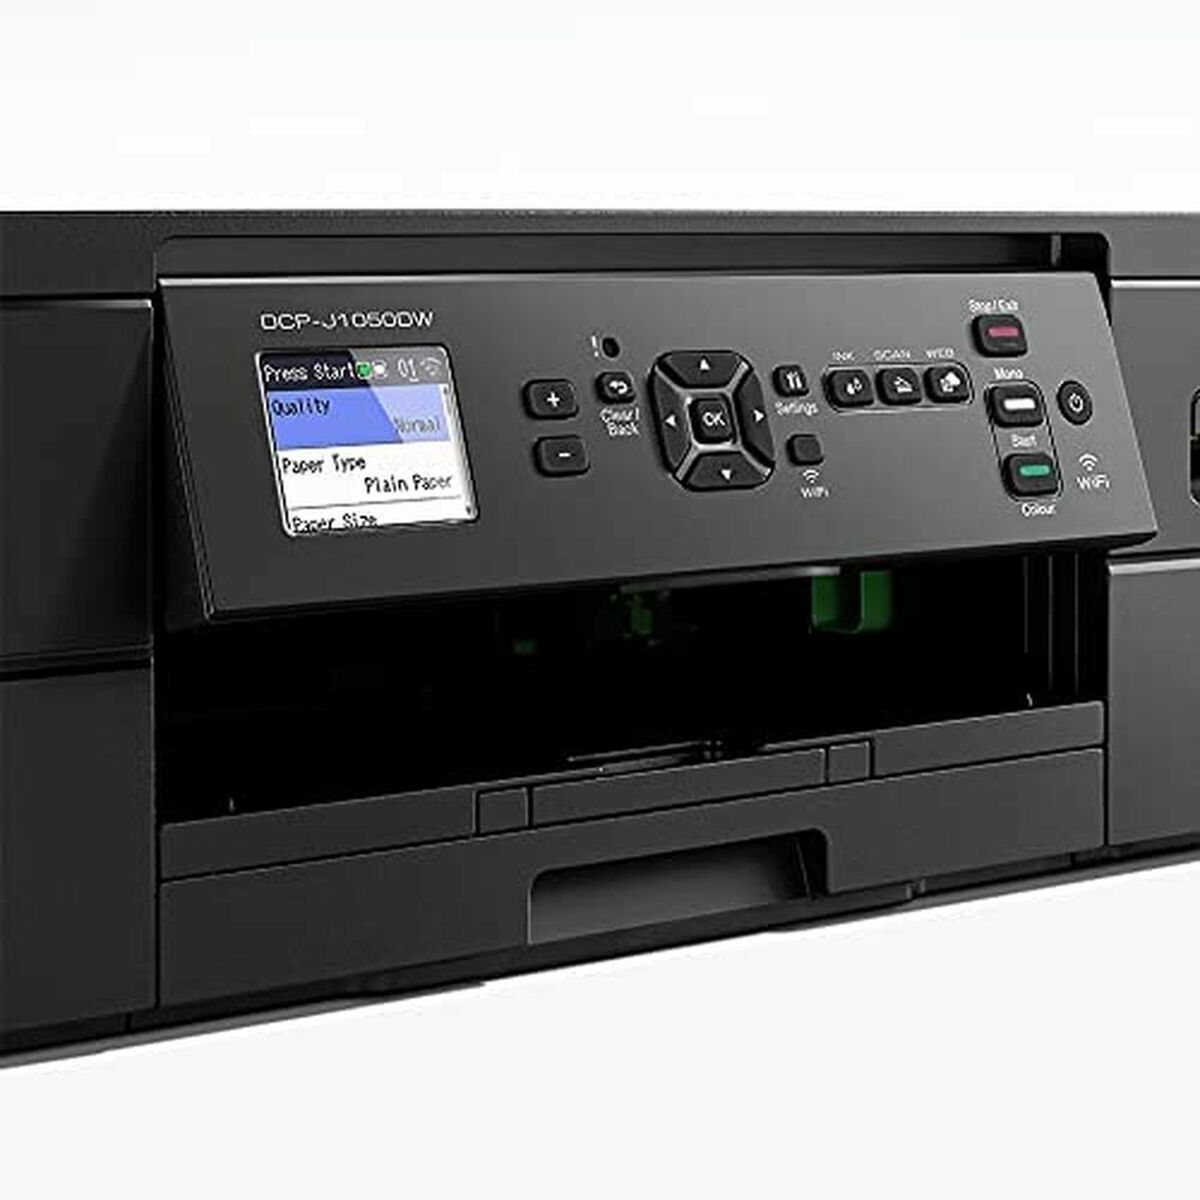 Imprimante Multifonction Brother DCP-J1050DW